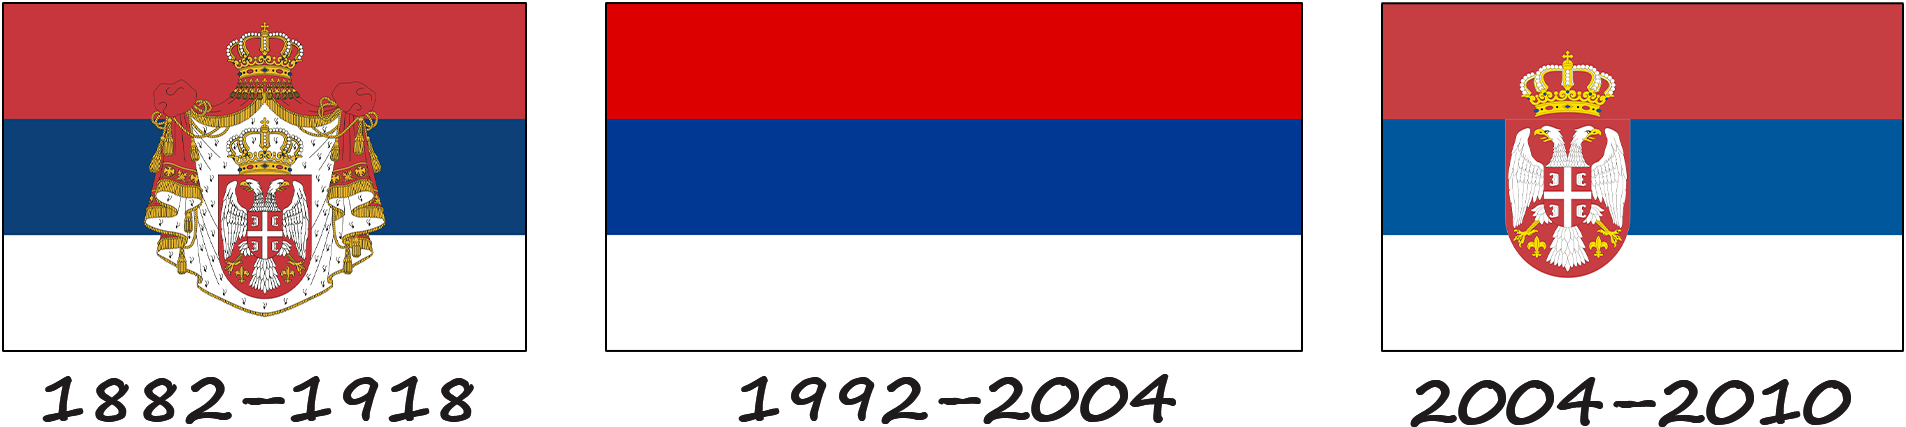 Historia de la bandera serbia